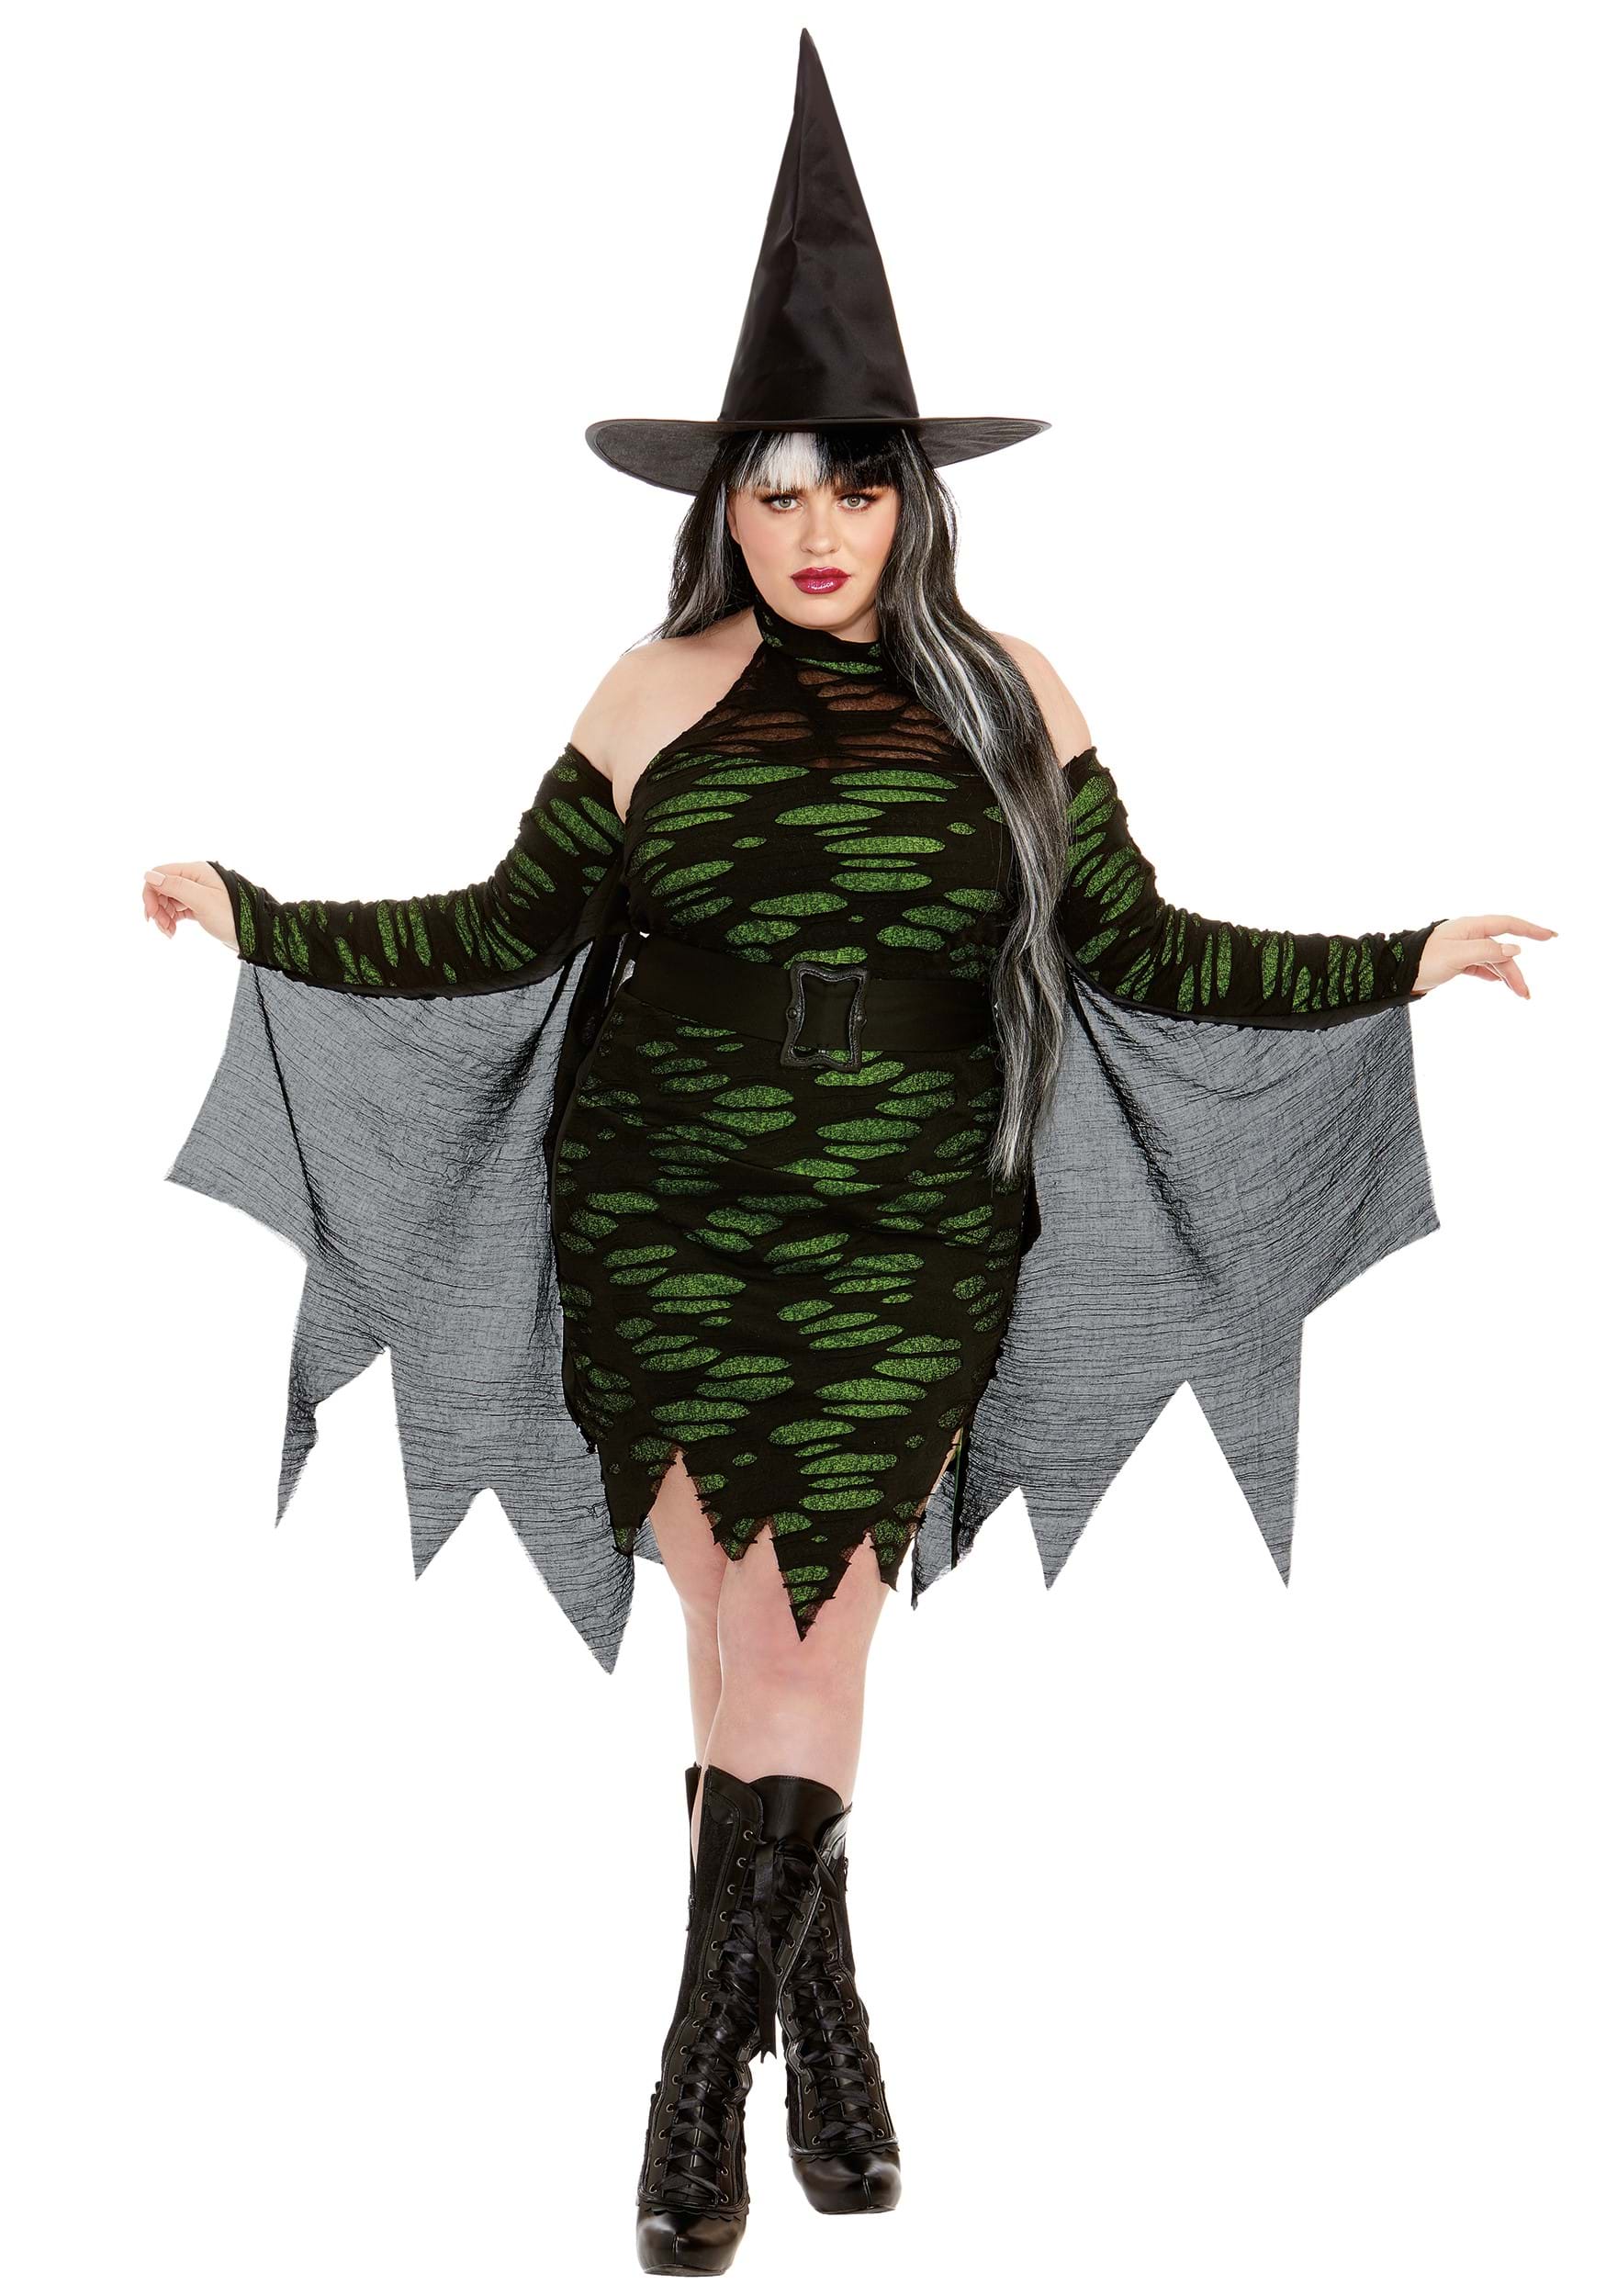 Photos - Fancy Dress Dreamgirl Plus Size Miss Enchantment Adult Women's Costume Green/Black